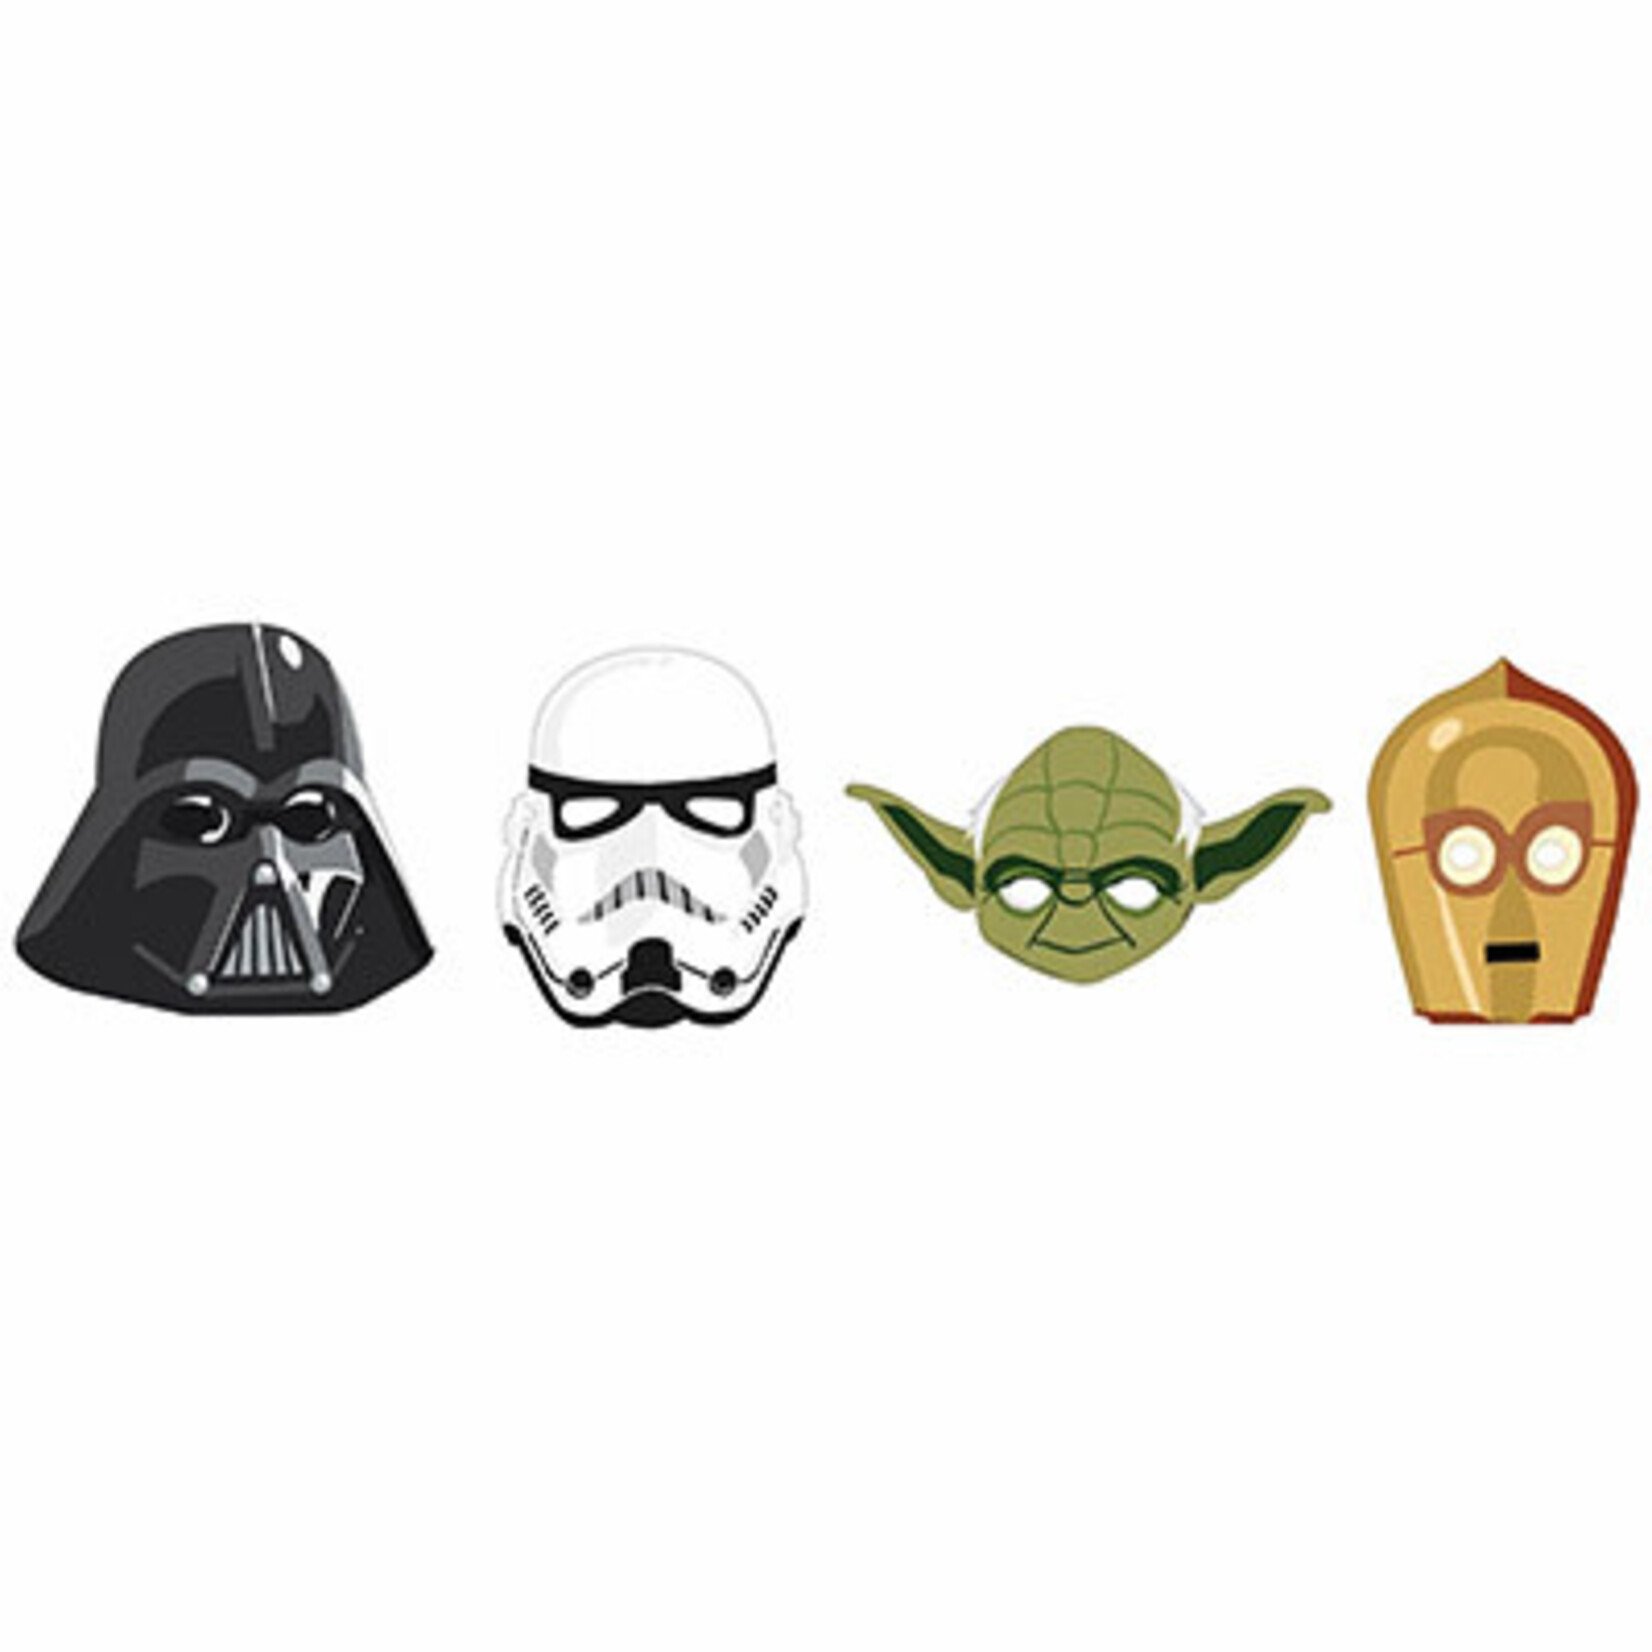 Amscan Star Wars Galaxy Masks - 8ct.